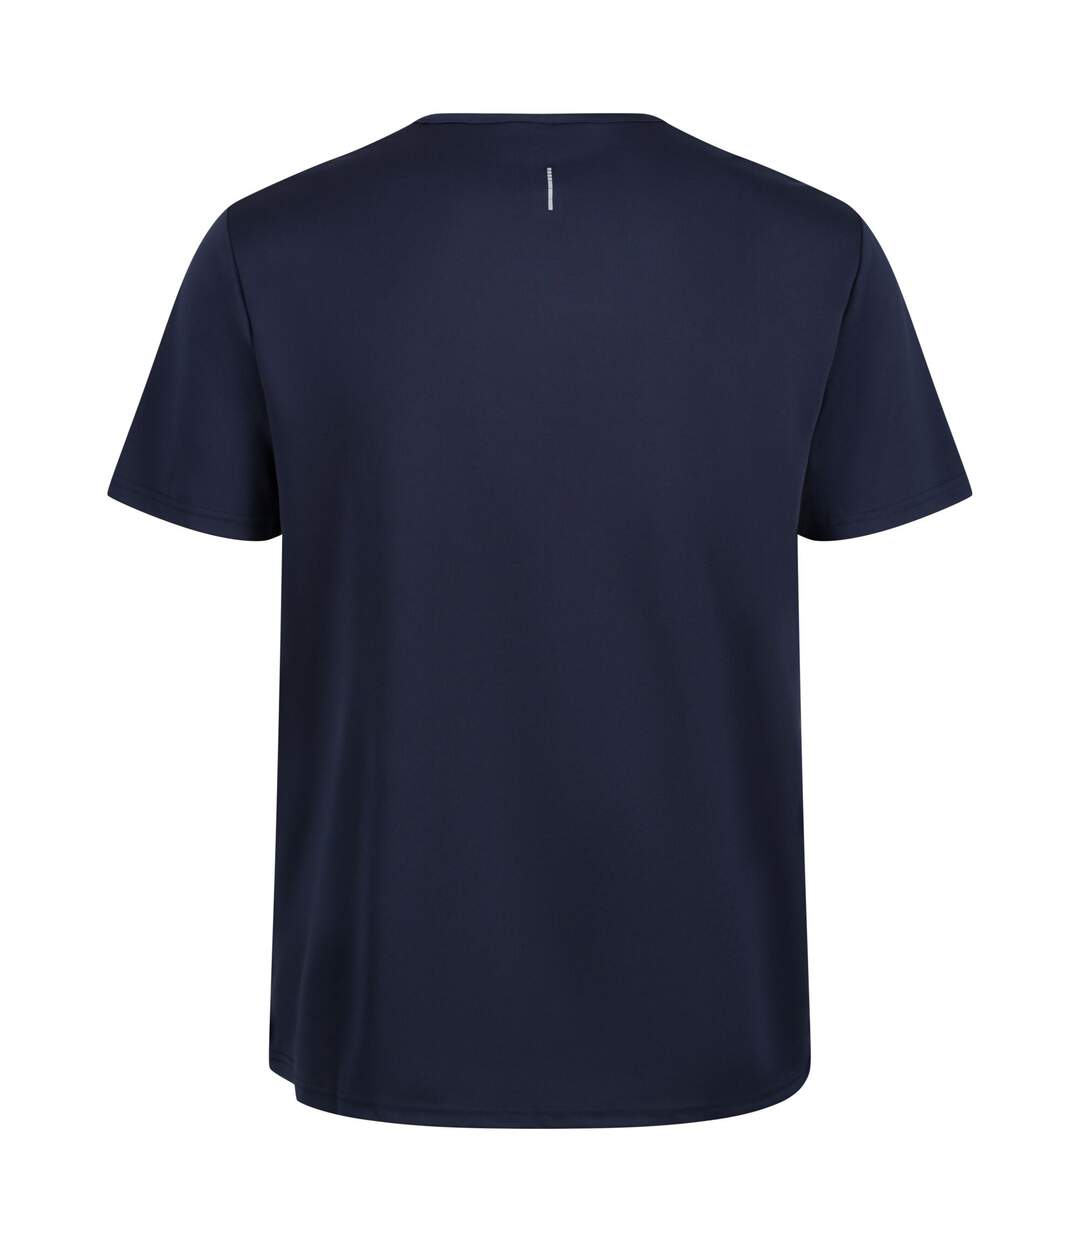 Regatta - T-shirt TORINO - Hommes (Bleu marine) - UTRG4091